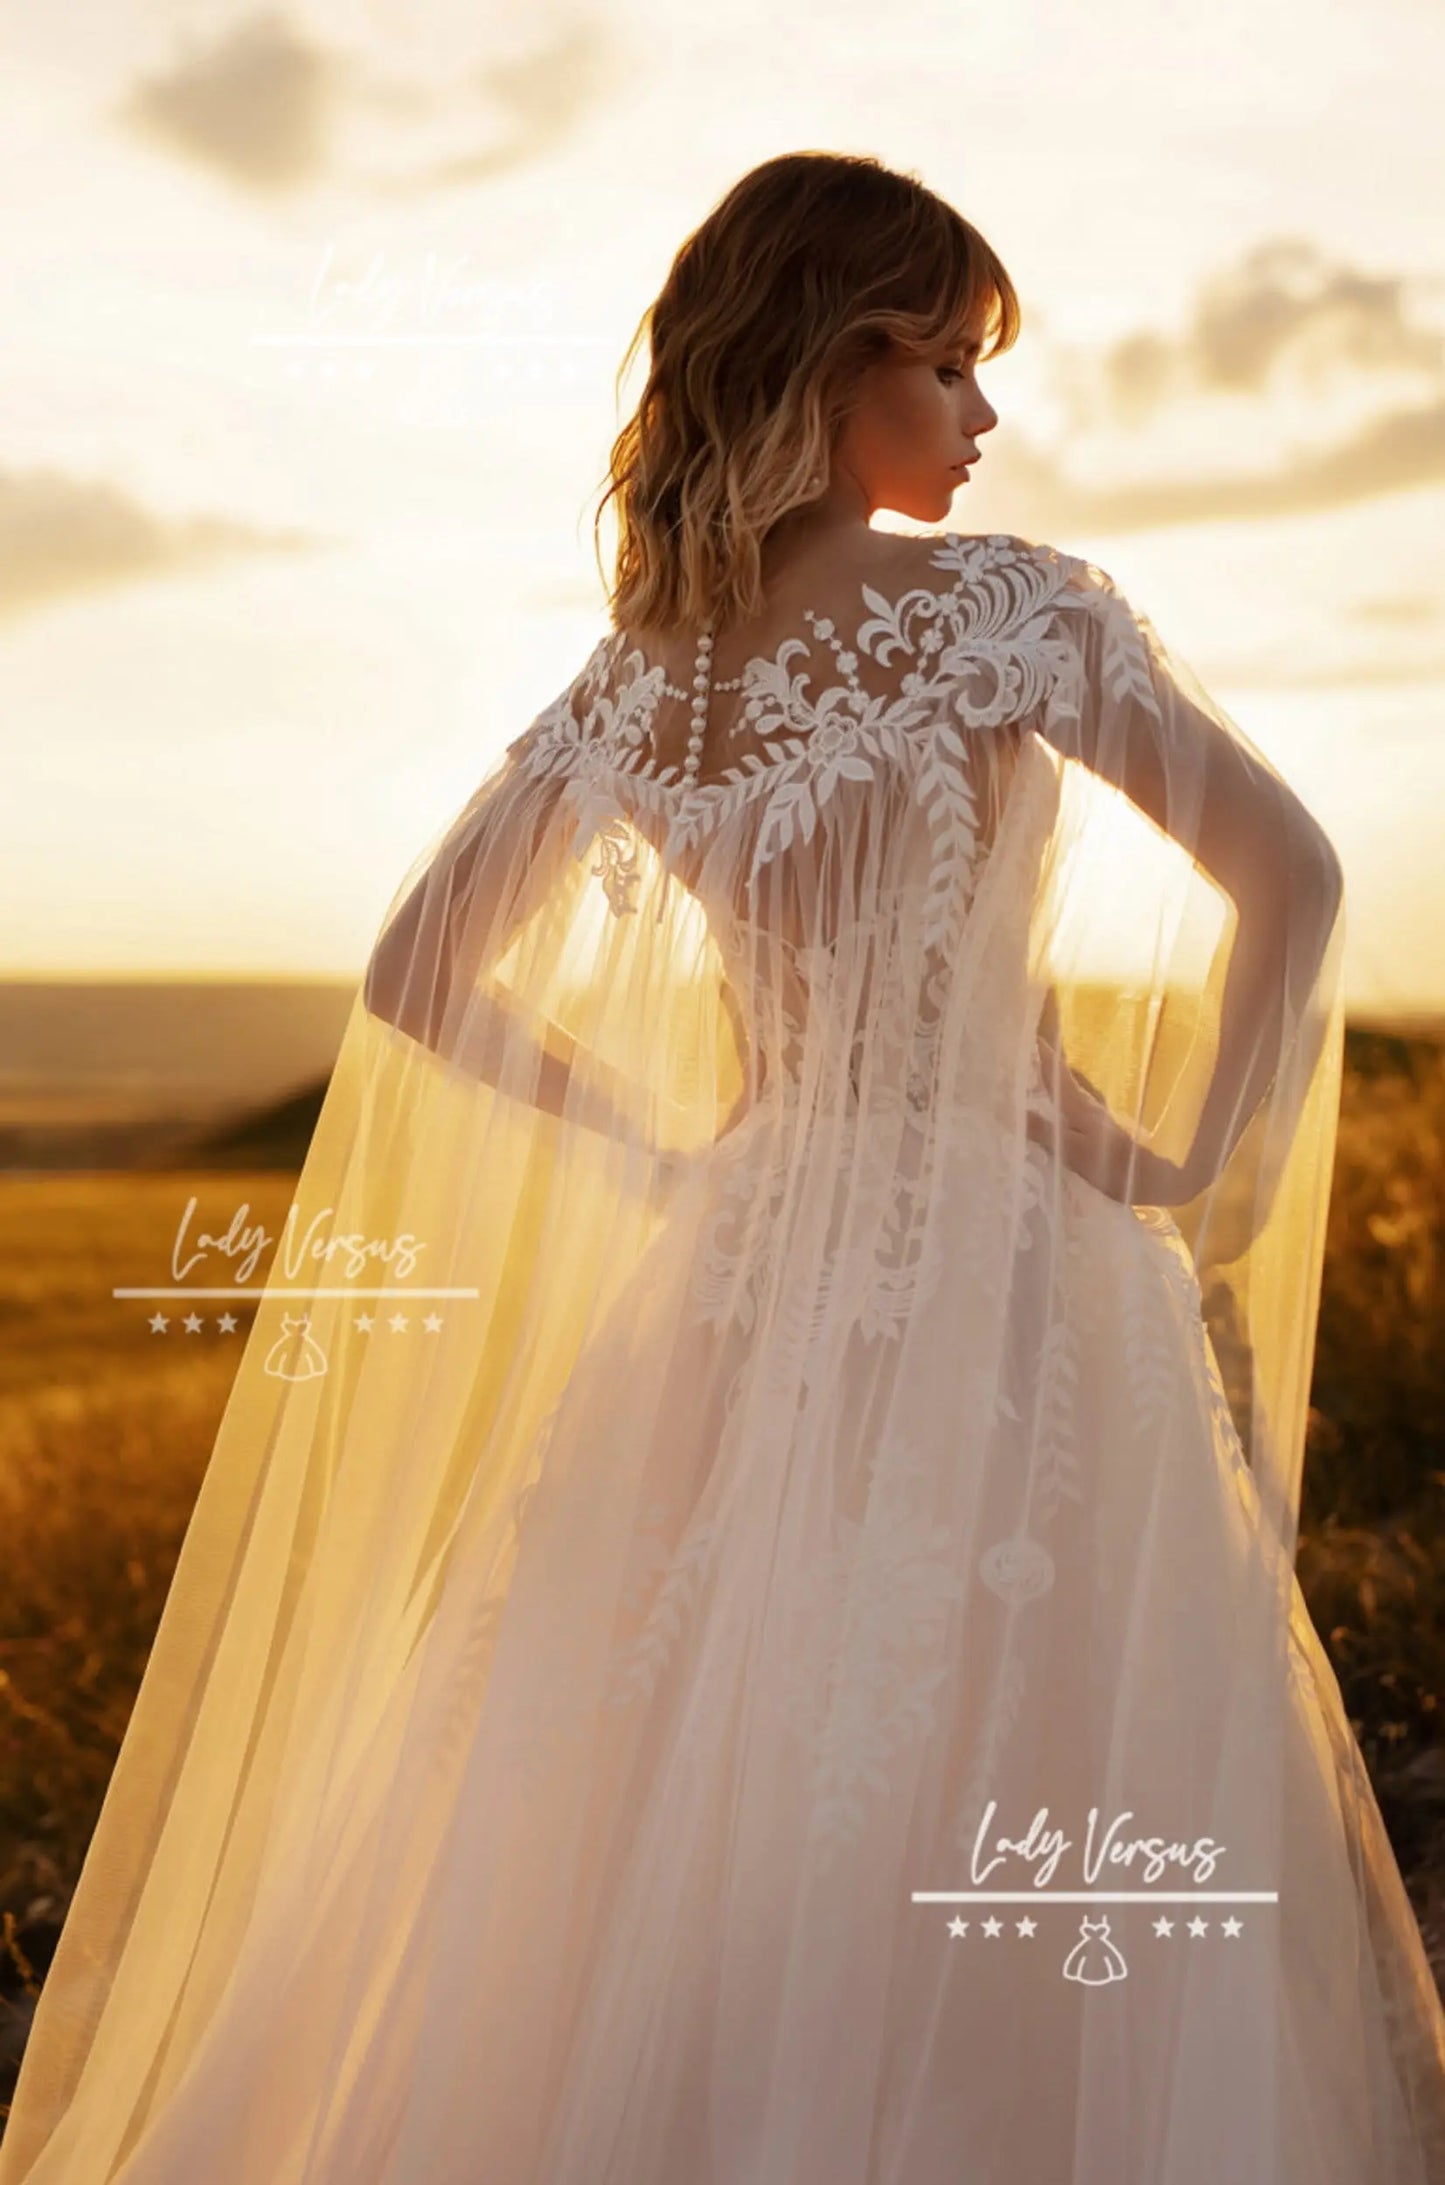 Boho Wedding Dress/ Bohemian Wedding Dress/ Beach Wedding Dress / Elegant  Lace bohemian wedding dress with Cape